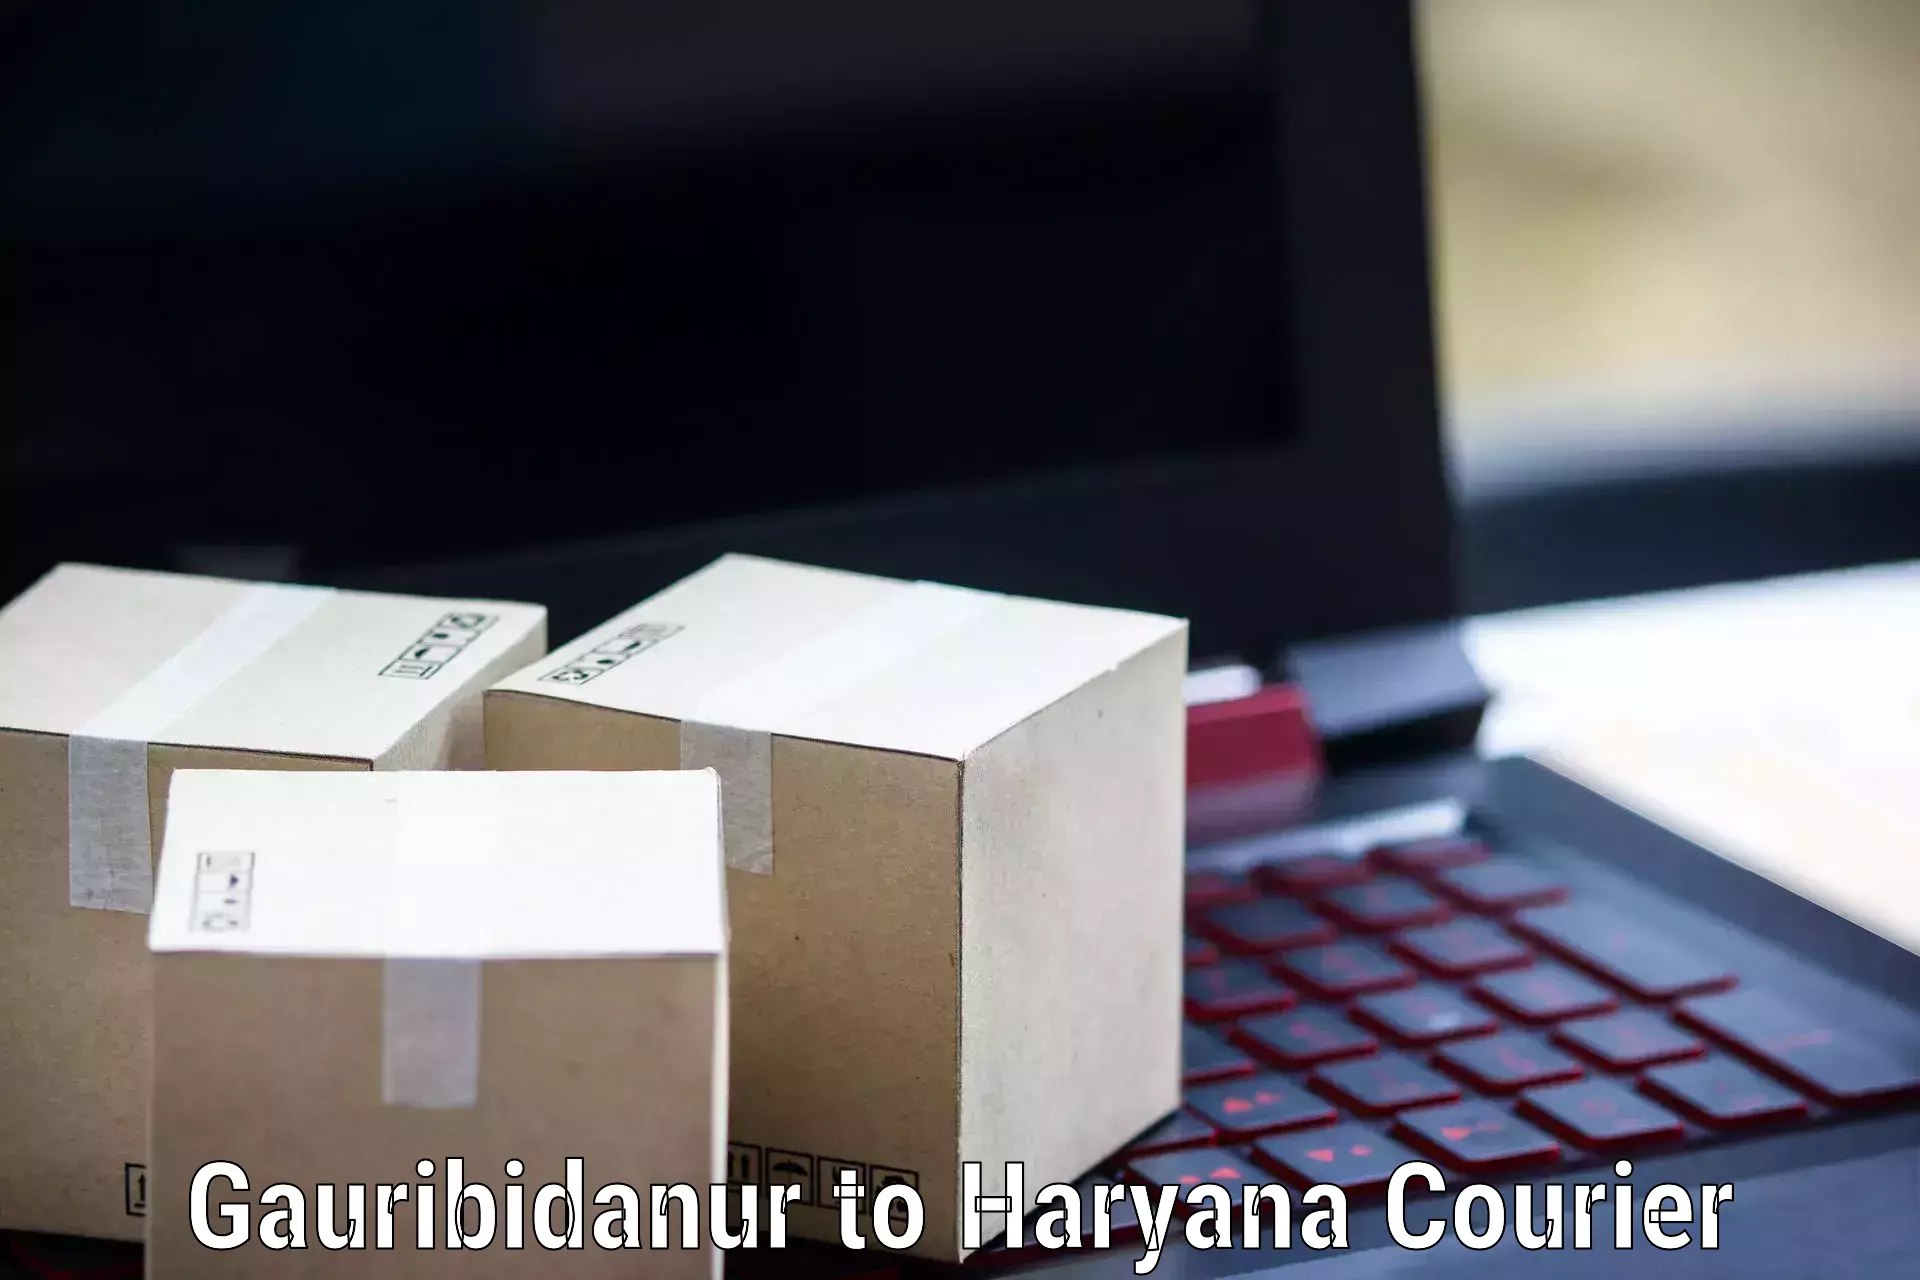 Budget-friendly shipping Gauribidanur to Hansi